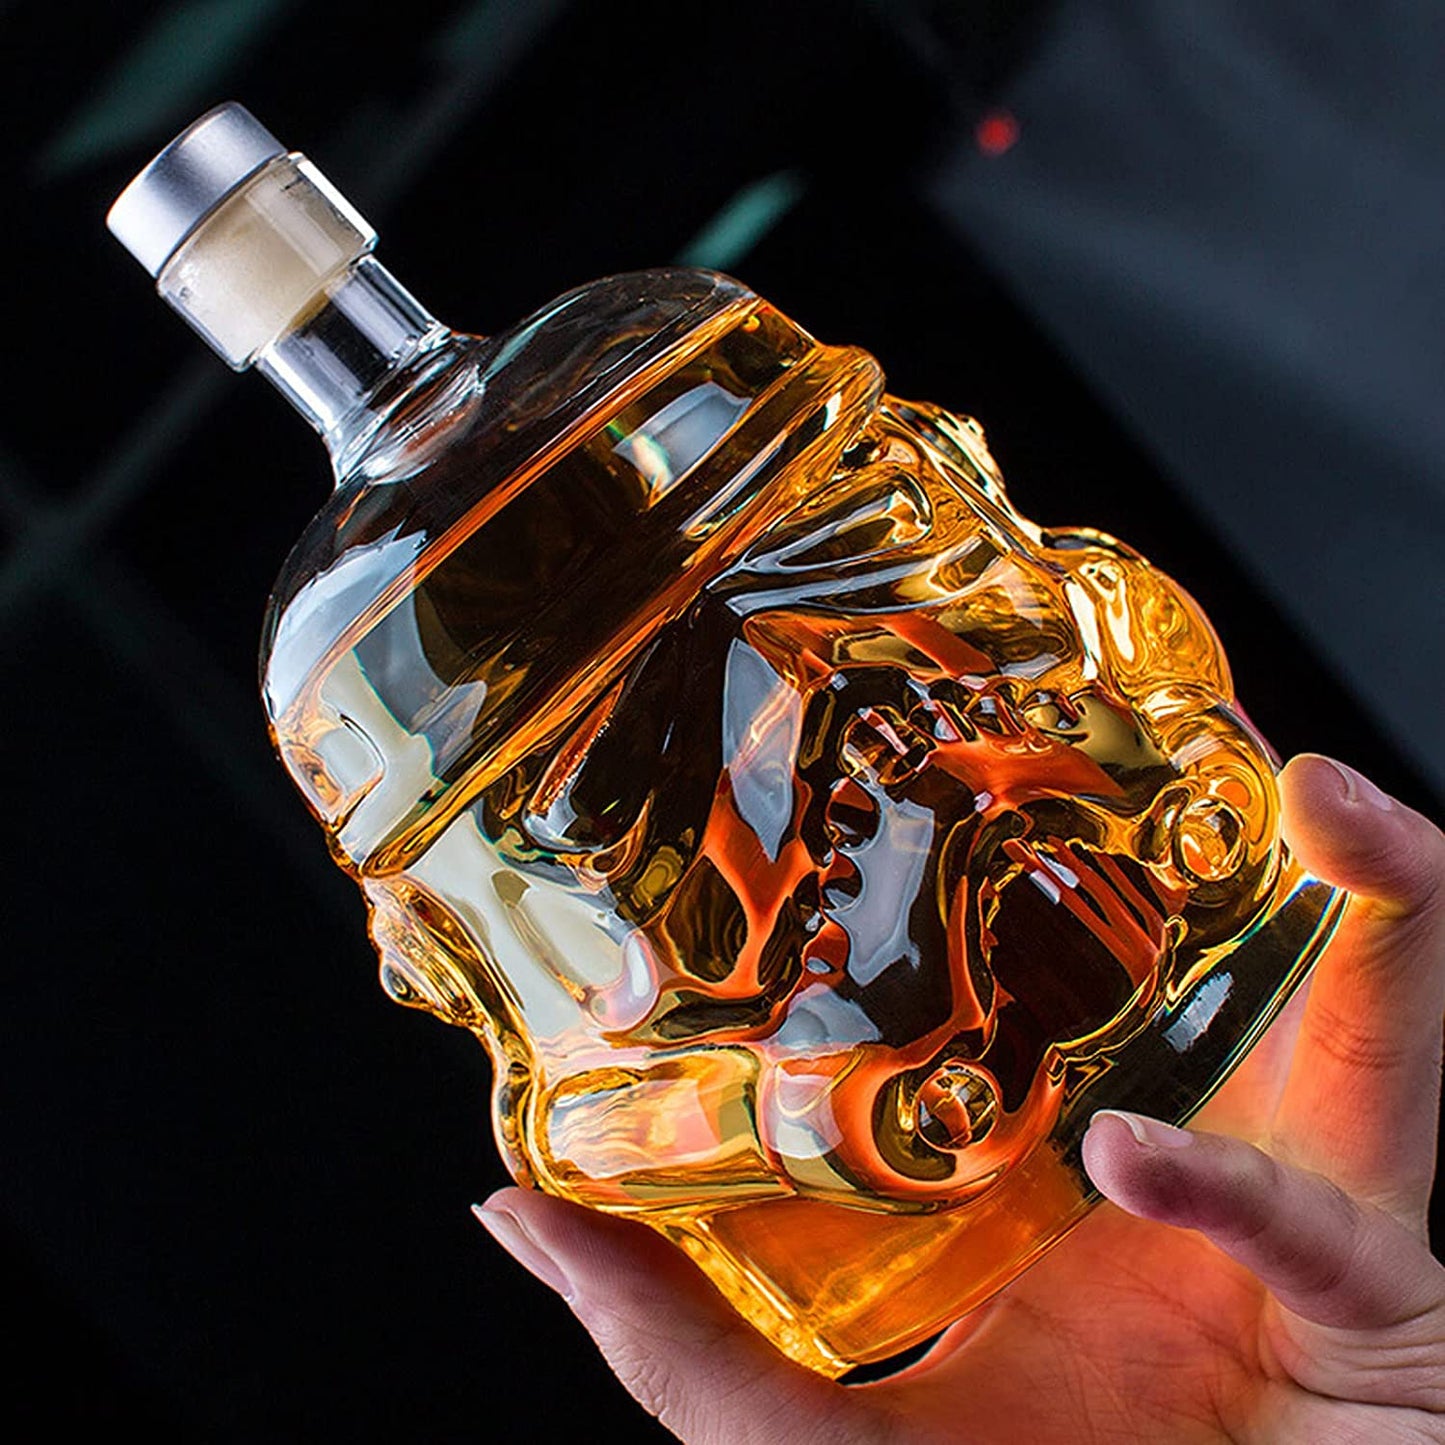 Whiskey Flask Carafe Decanter, Whiskey Glasses, Whiskey Carafe for Wine, Liquor, Scotch, Bourbon, Brandy - 750ML